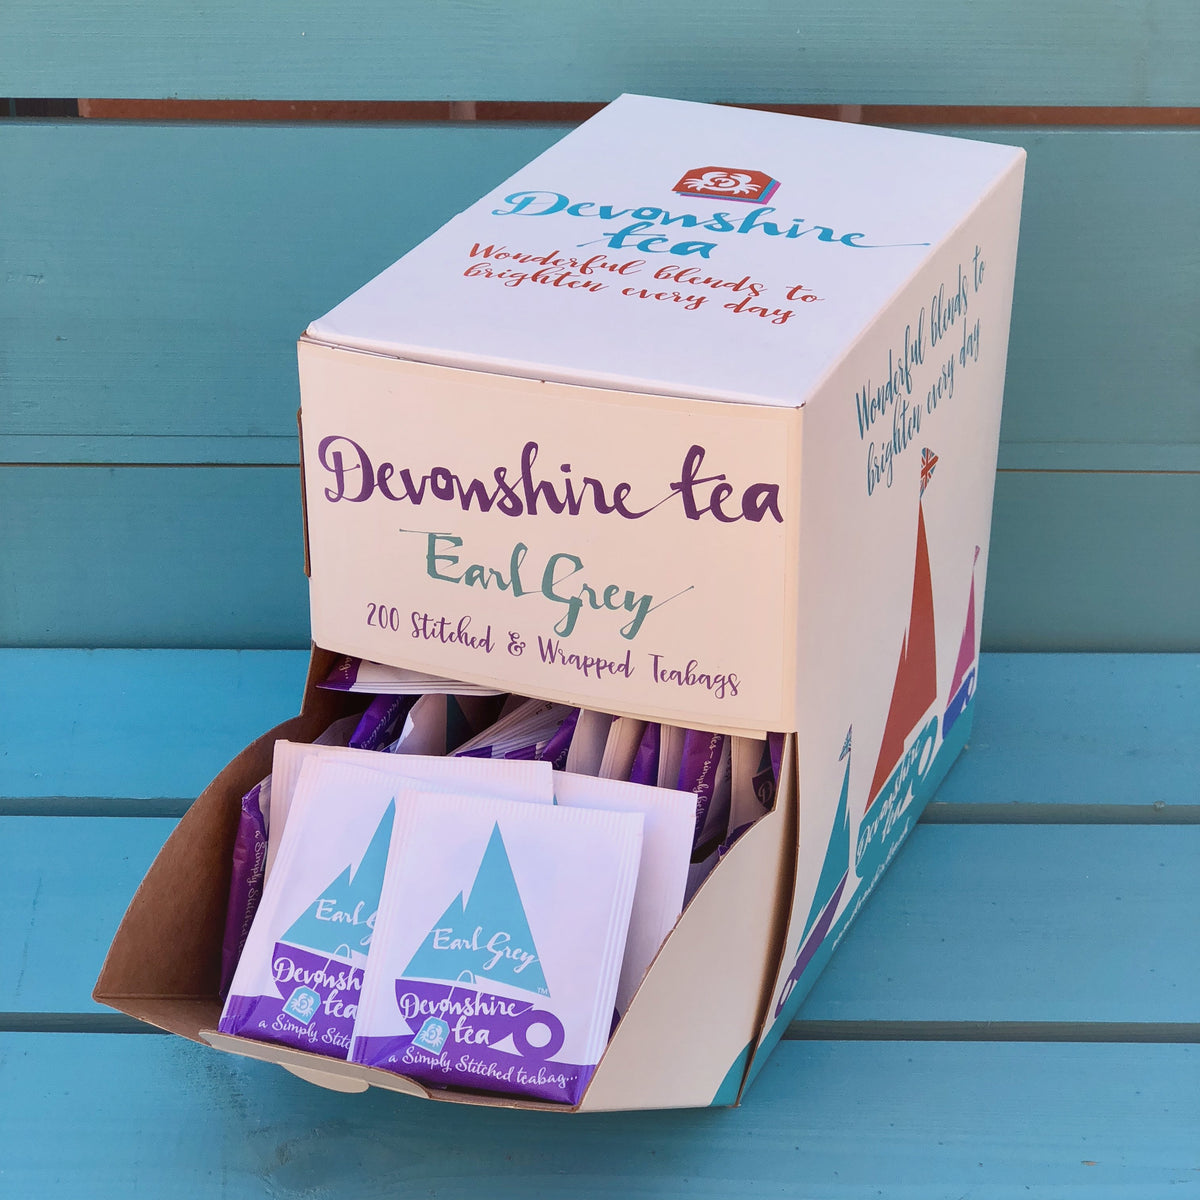 Devonshire Tea Earl Grey